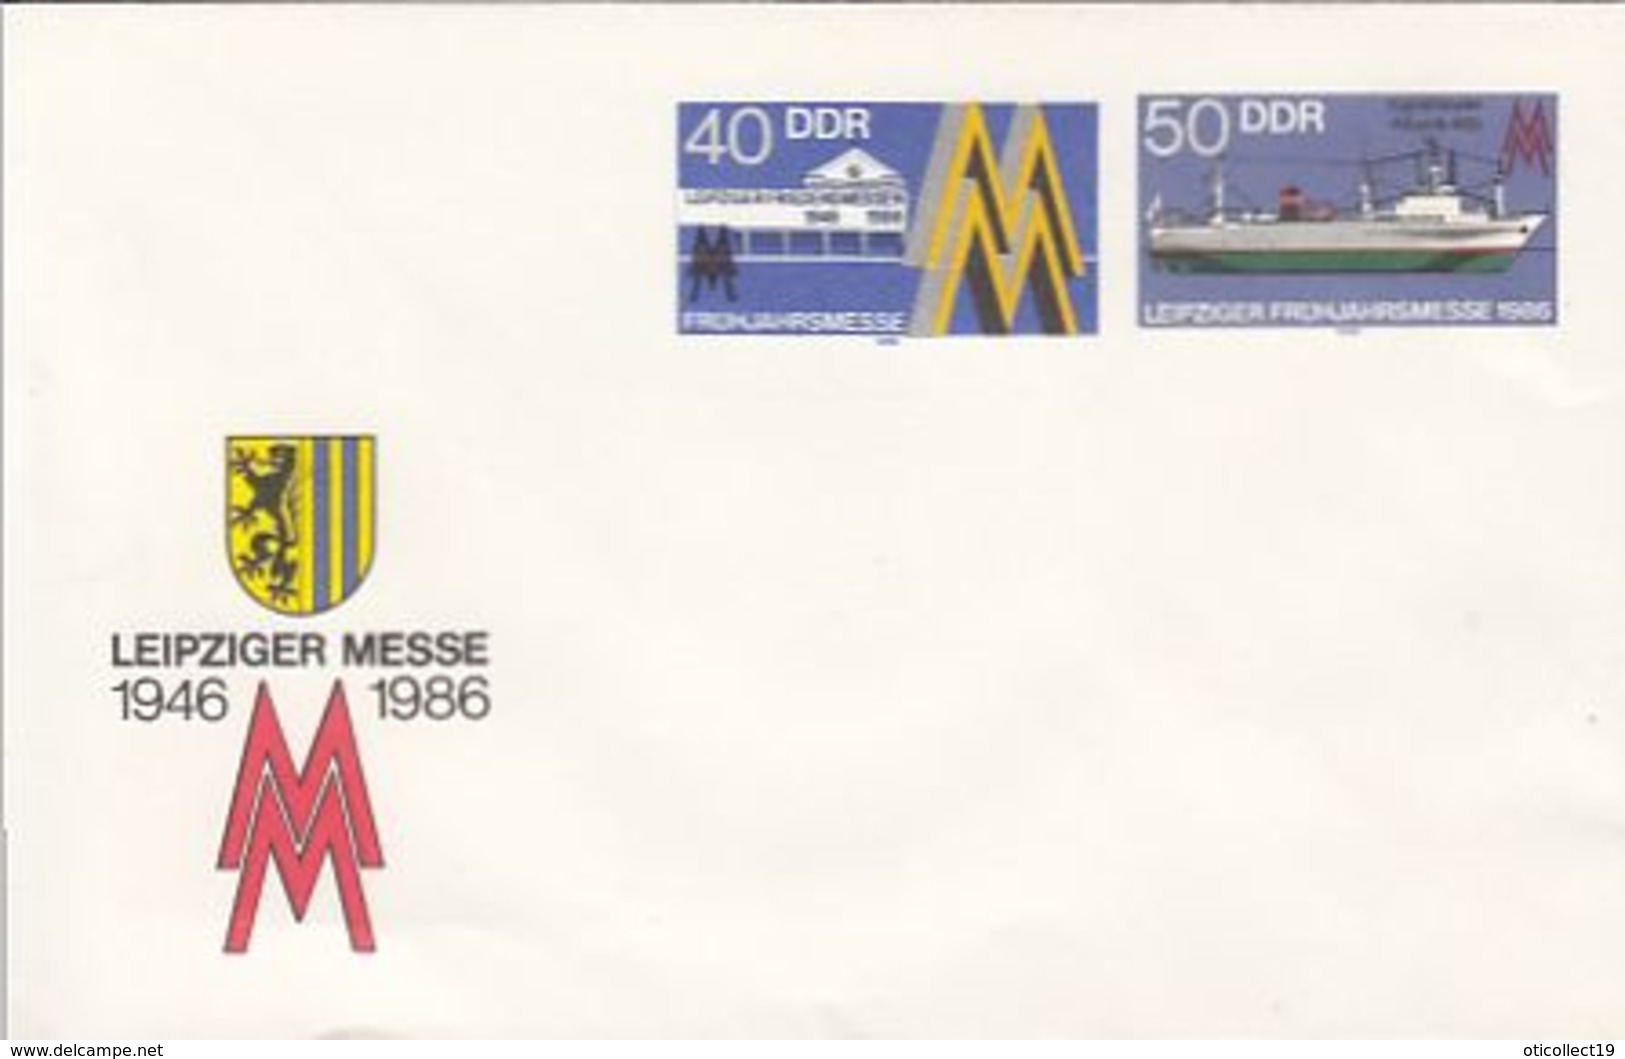 LEIPZIG FAIR, COAT OF ARMS, SHIPP, COVER STATIONERY, 1986, GERMANY-DDR - Briefomslagen - Ongebruikt